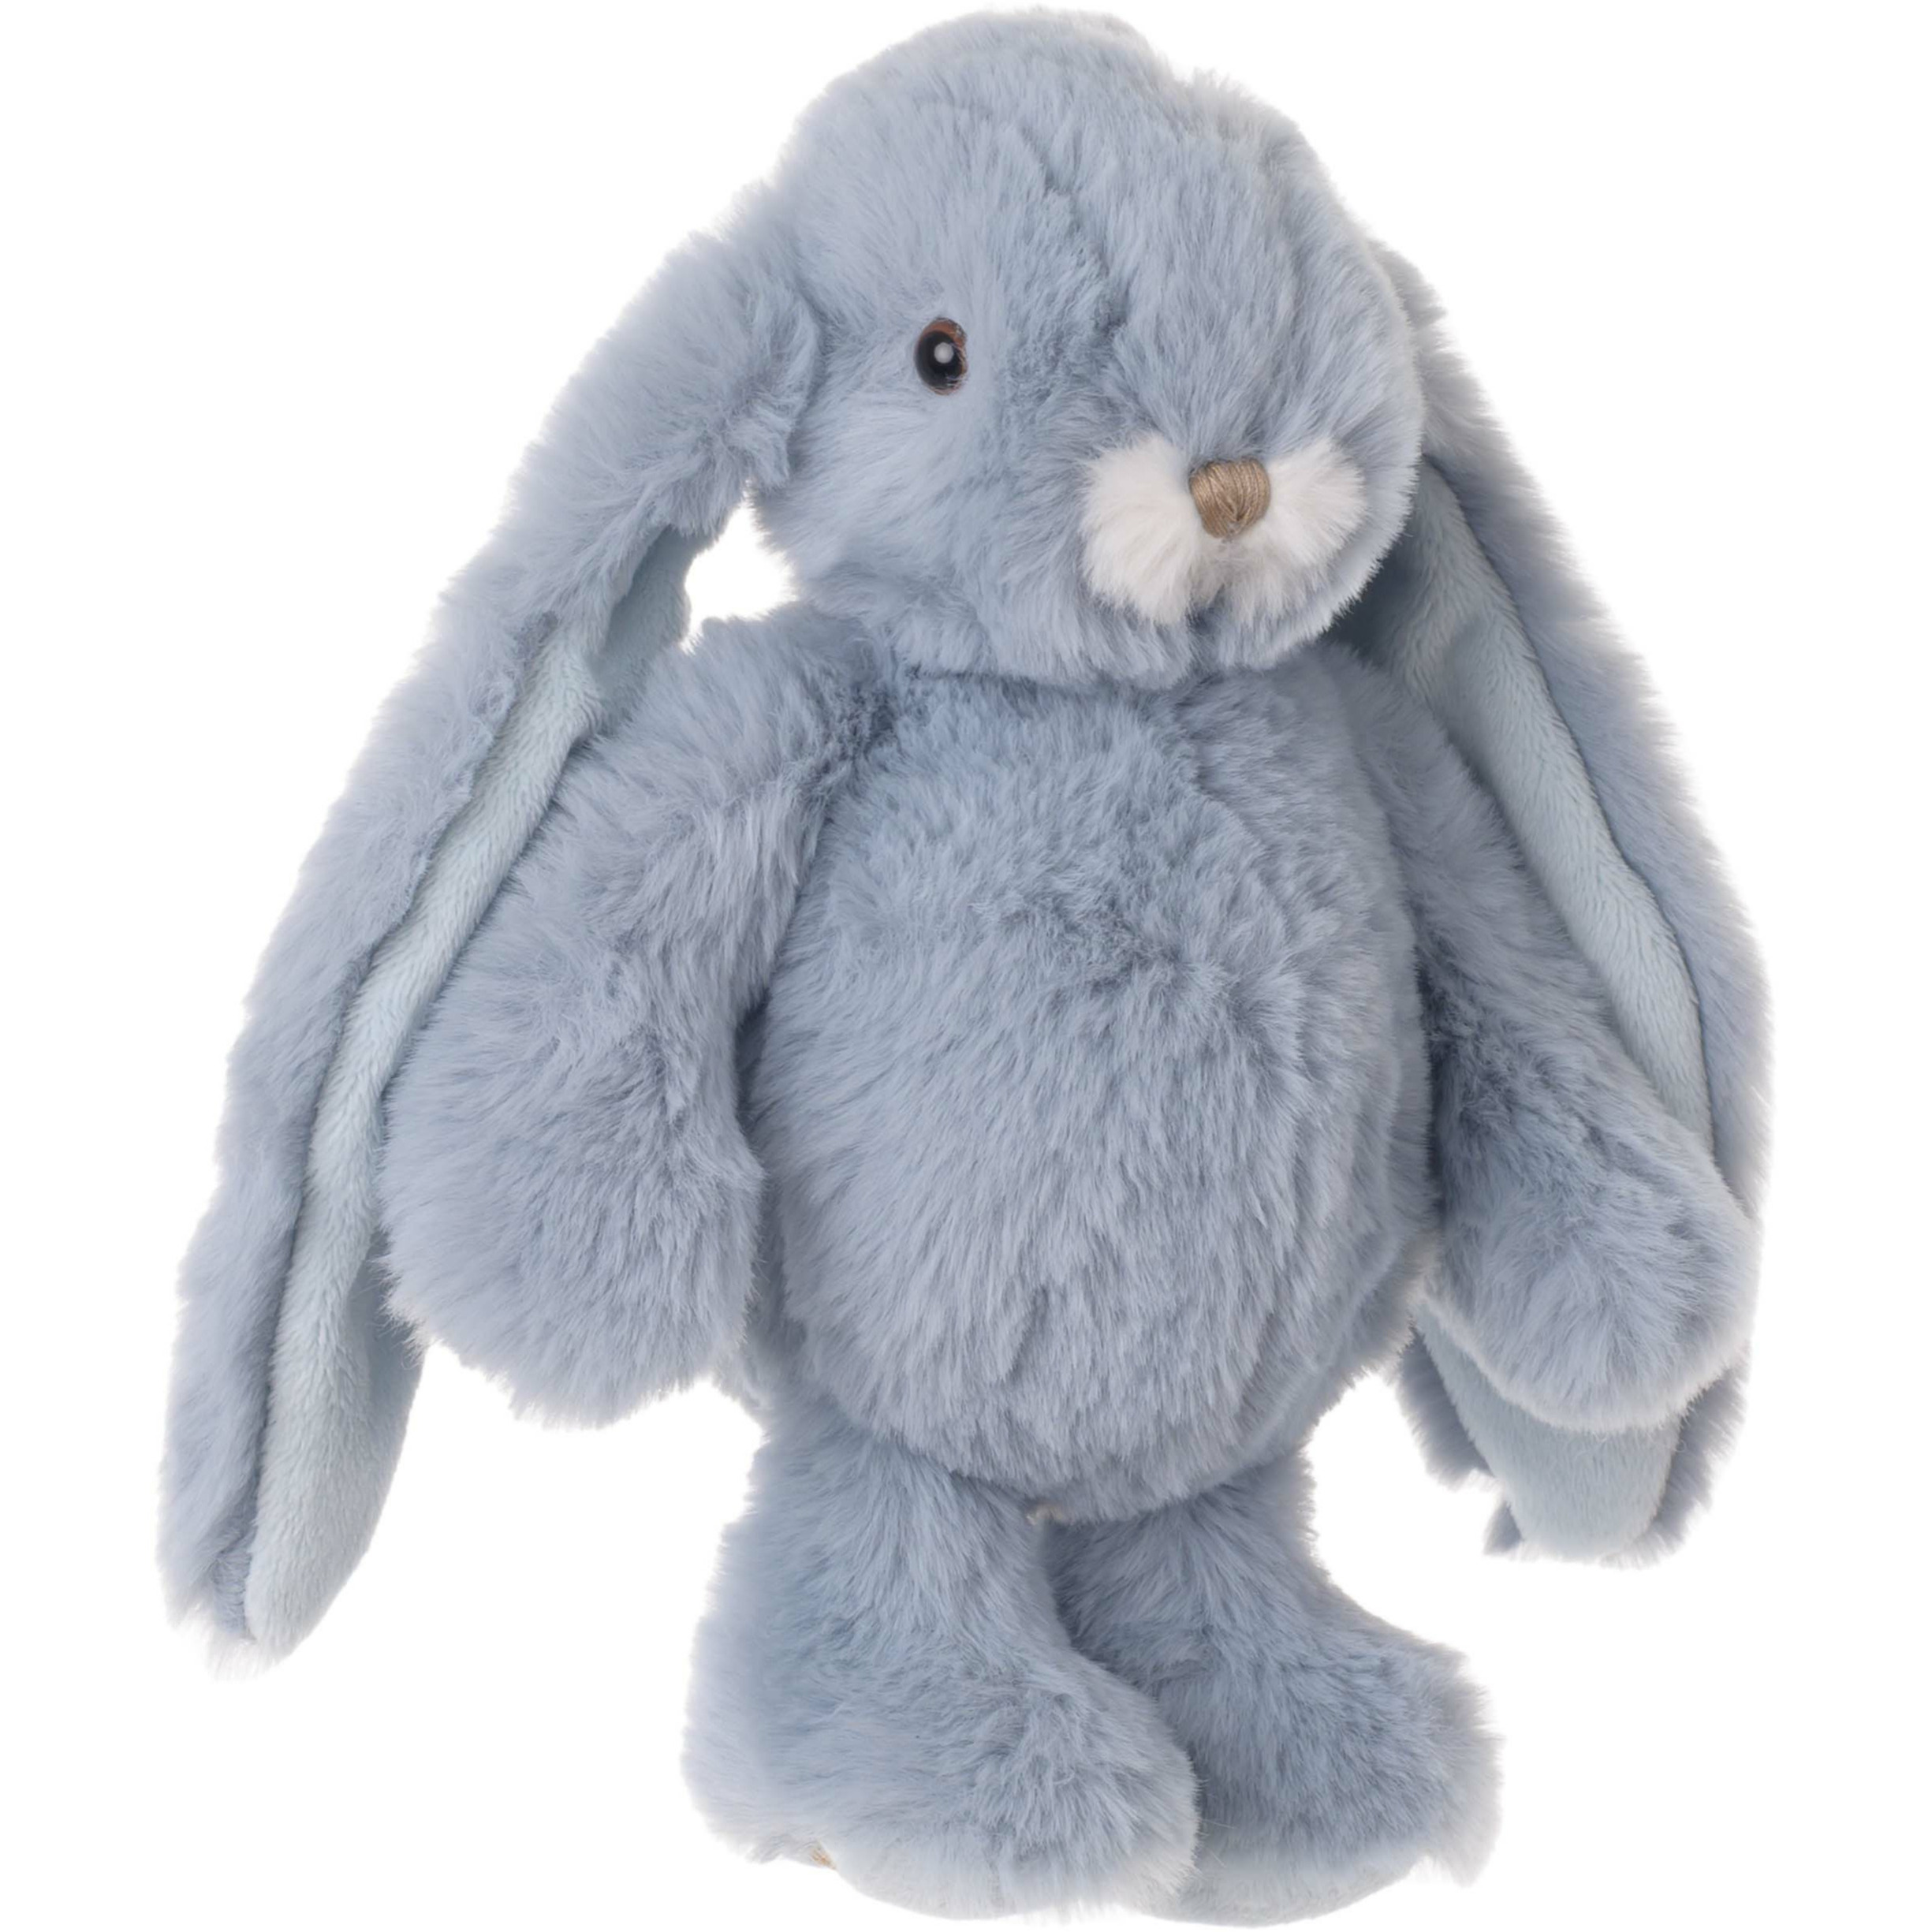 Bukowski pluche konijn knuffeldier lichtblauw staand 22 cm luxe knuffels